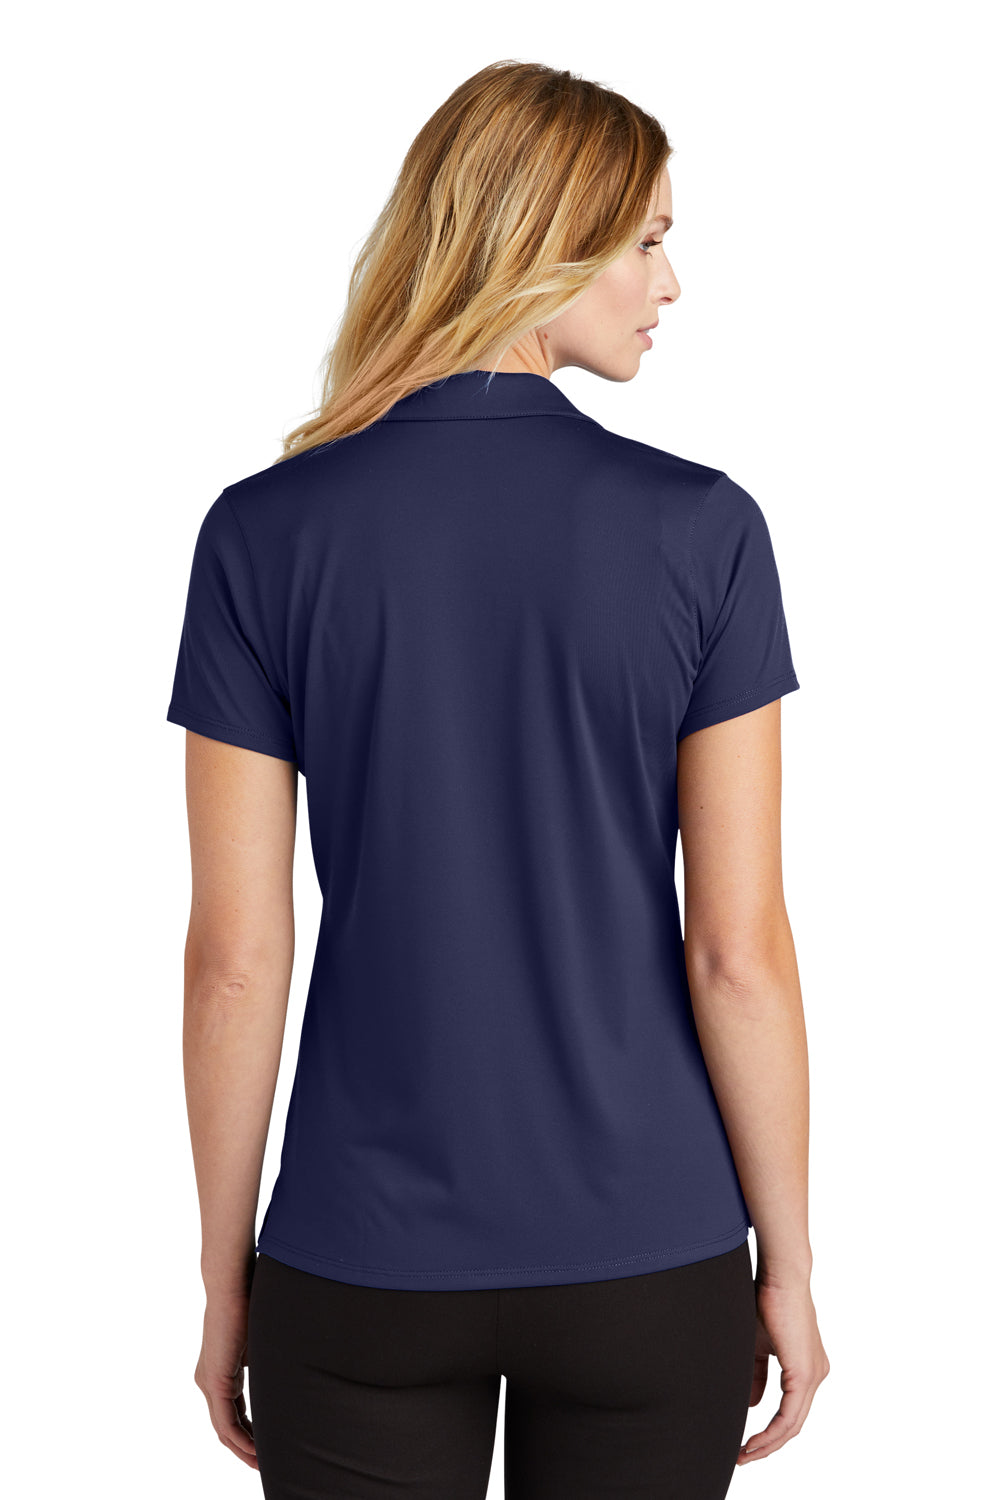 Port Authority LK398 Performance Staff Short Sleeve Polo Shirt True Navy Blue Back